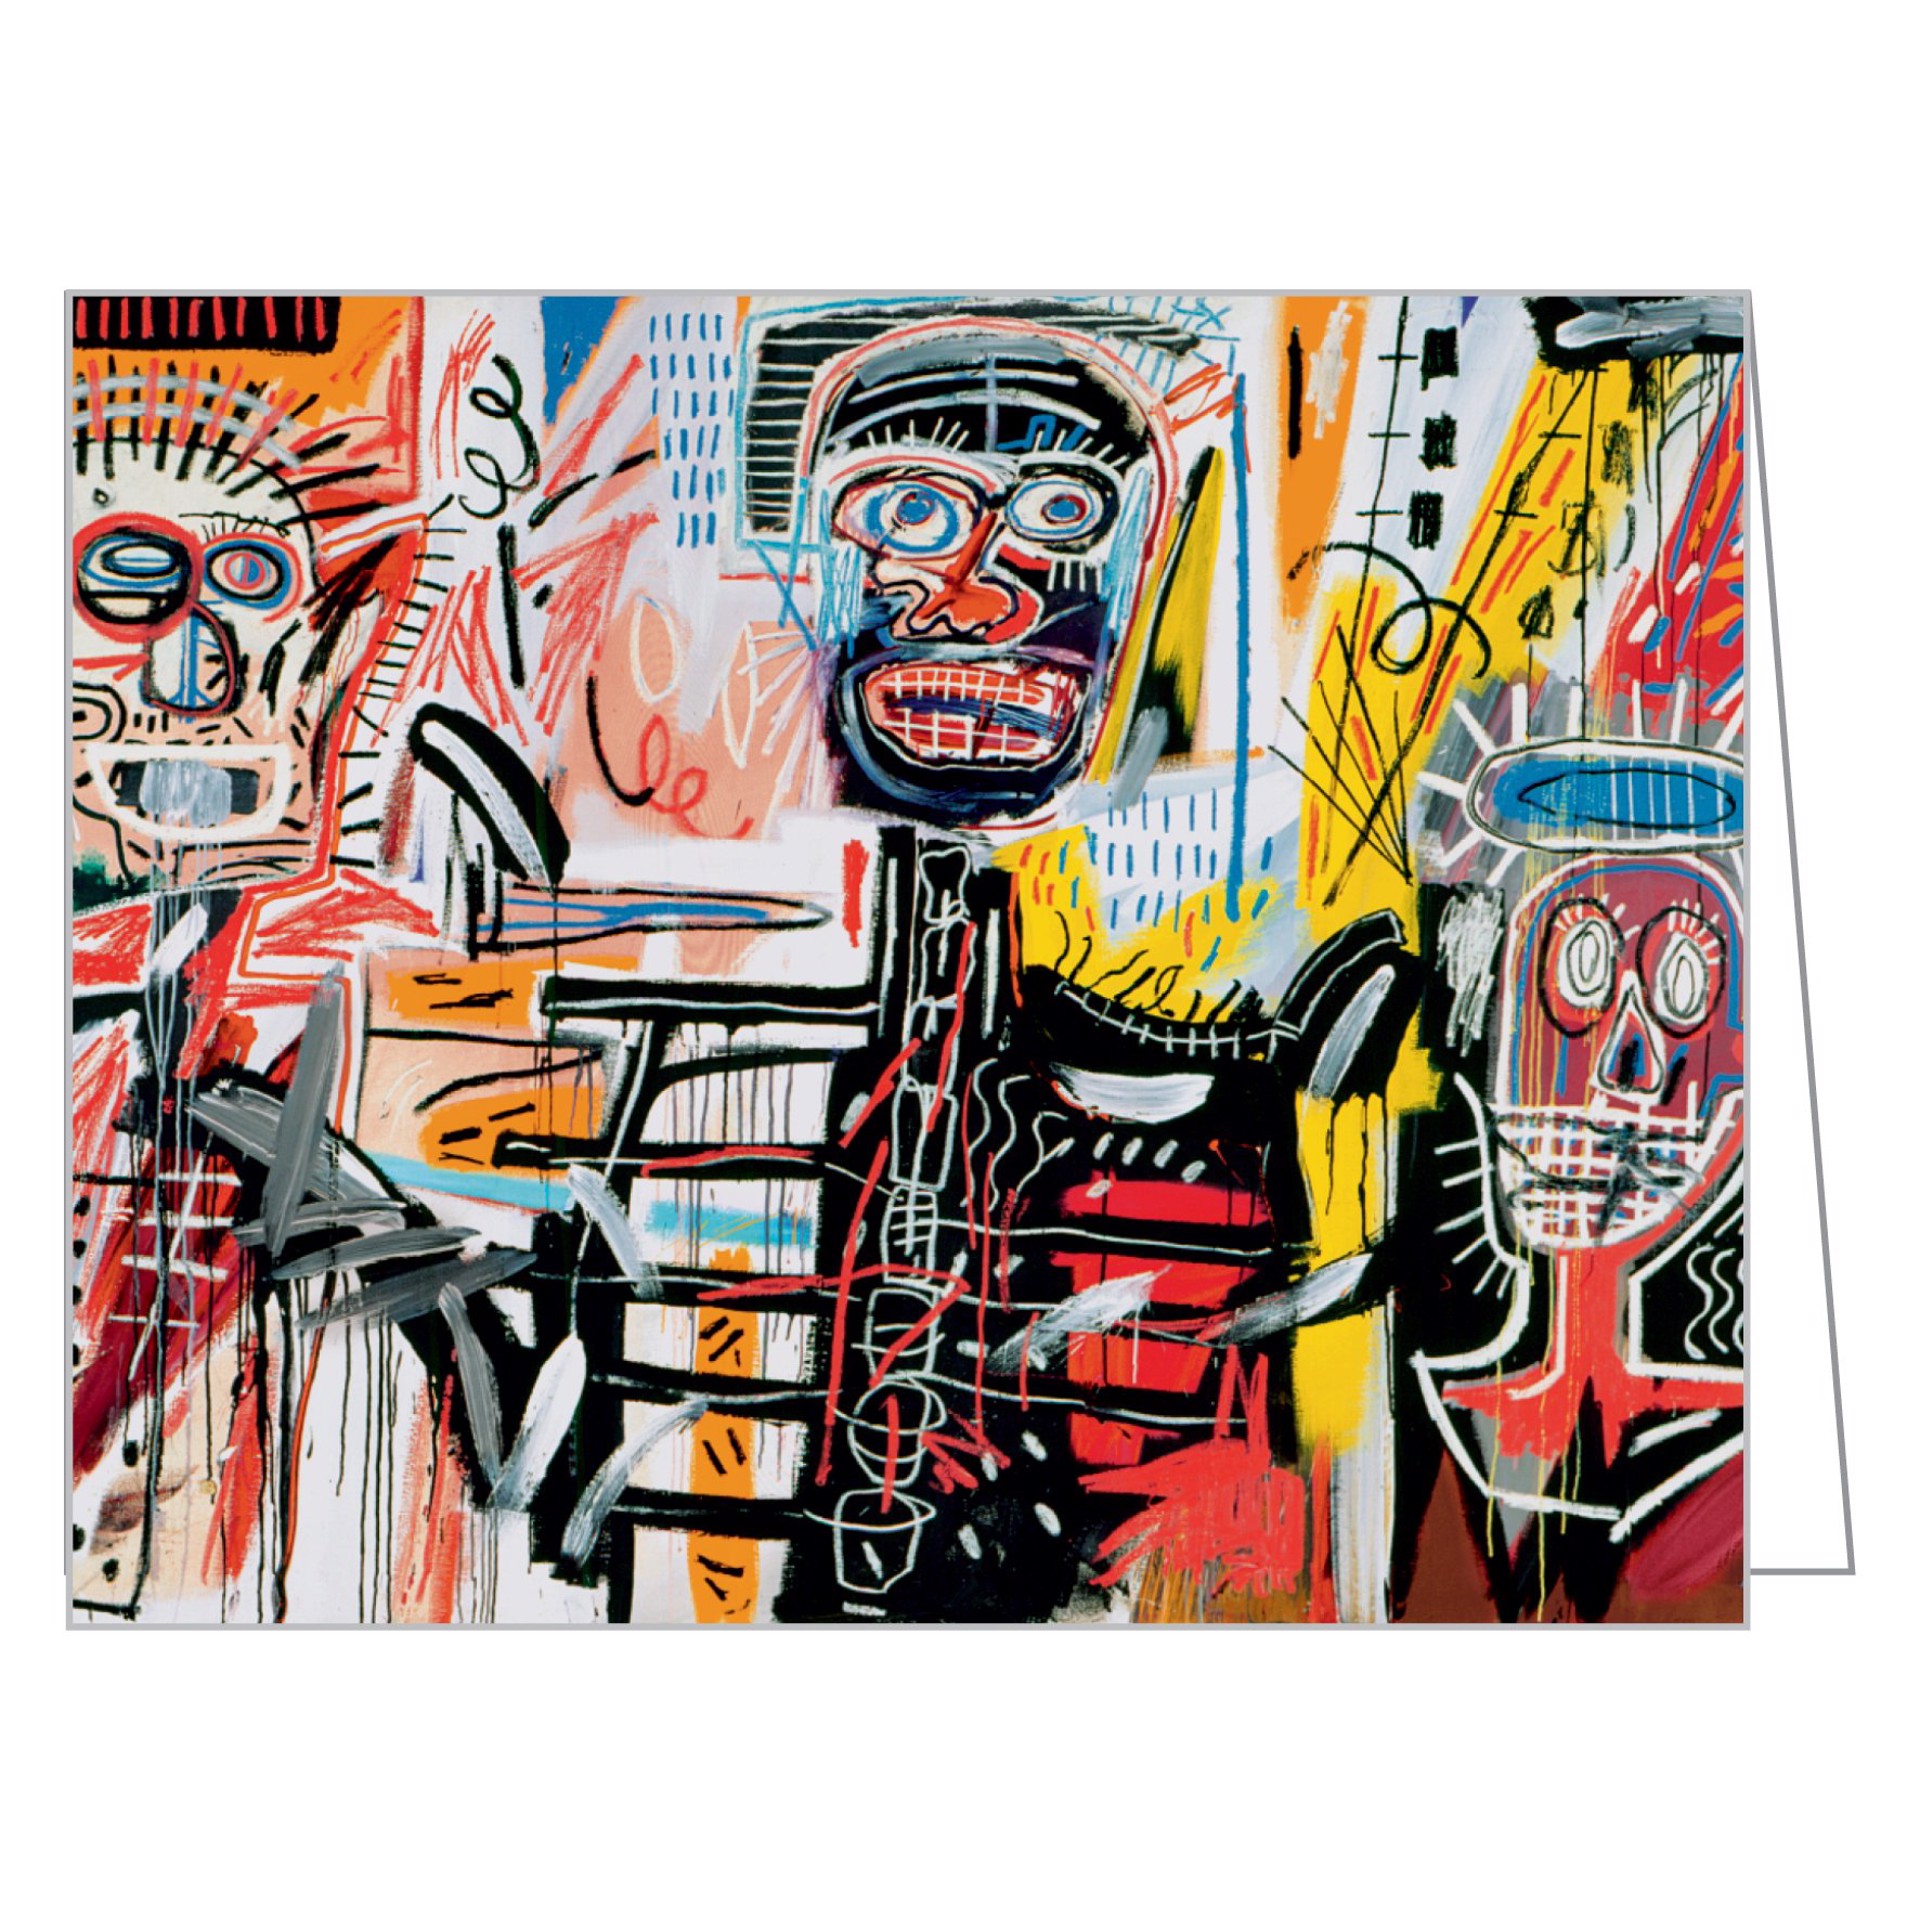 Jean-Michel Basquiat QuickNotes by Jean-Michel Basquiat